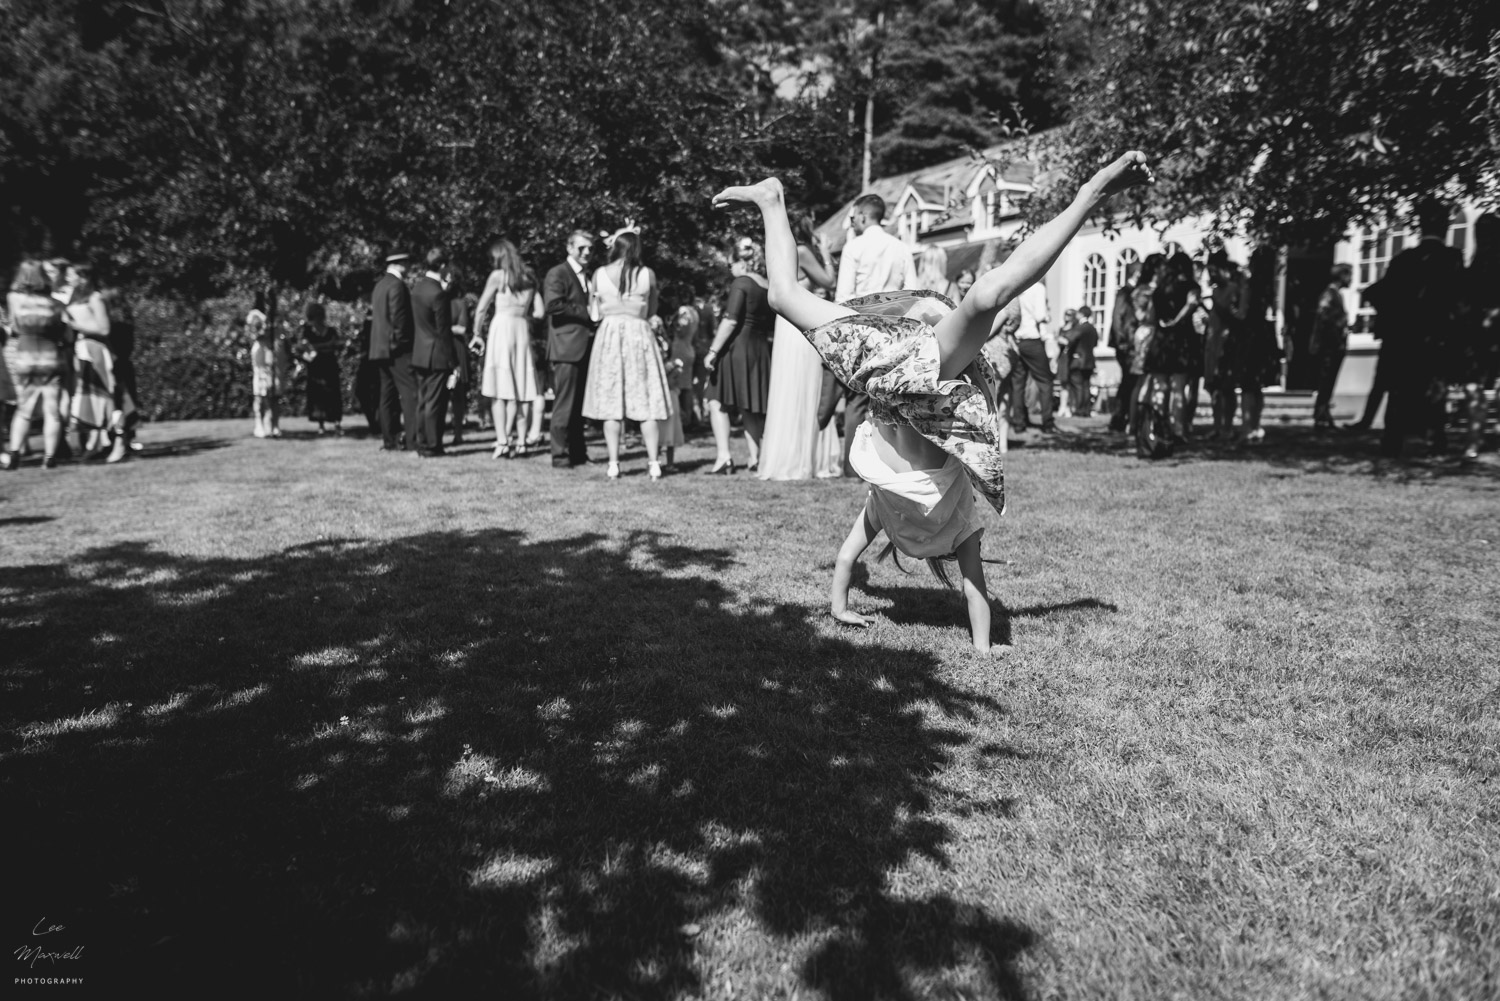 Wedding photographer bridwell garden games